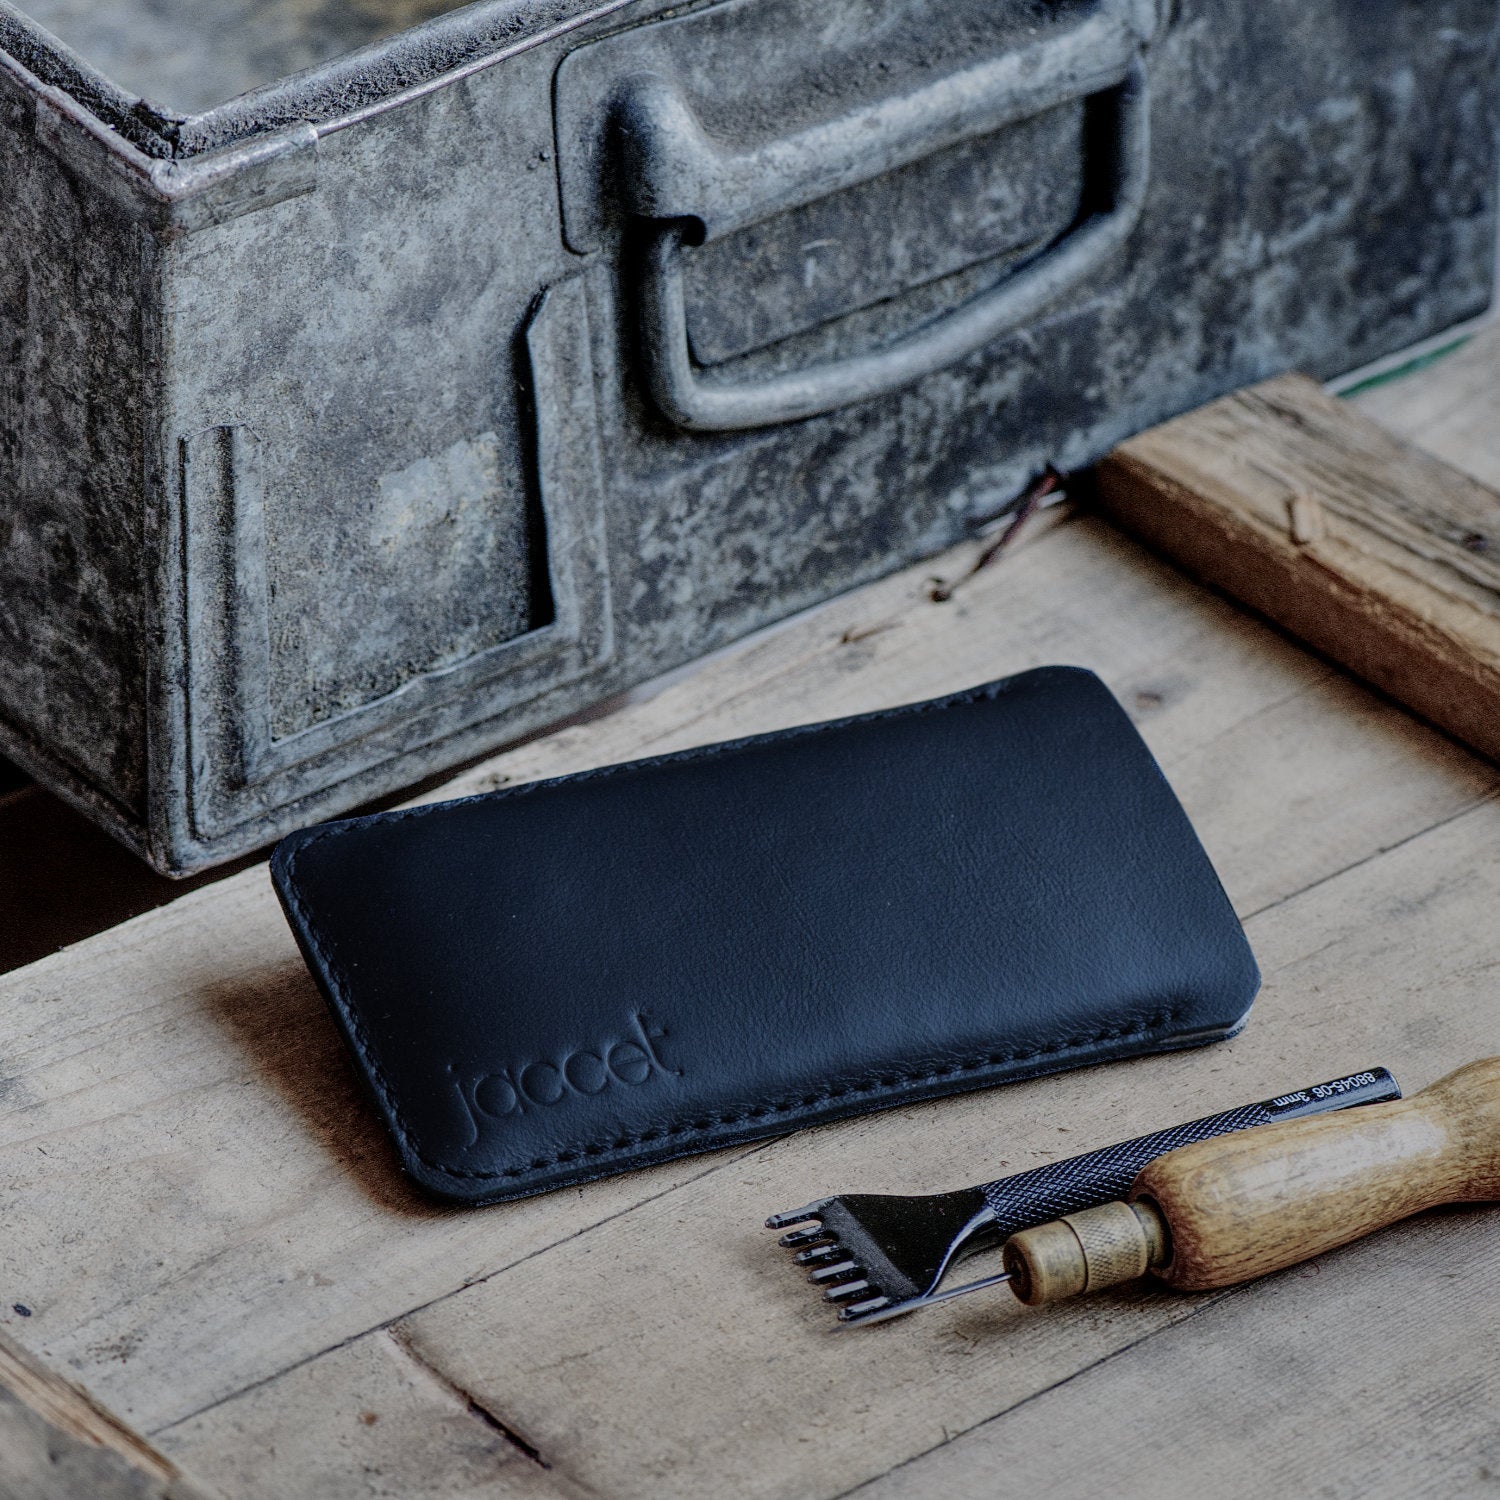 Full-grain leather Sony Xperia sleeve - Black leather with grey wolvilt - 100% handmade